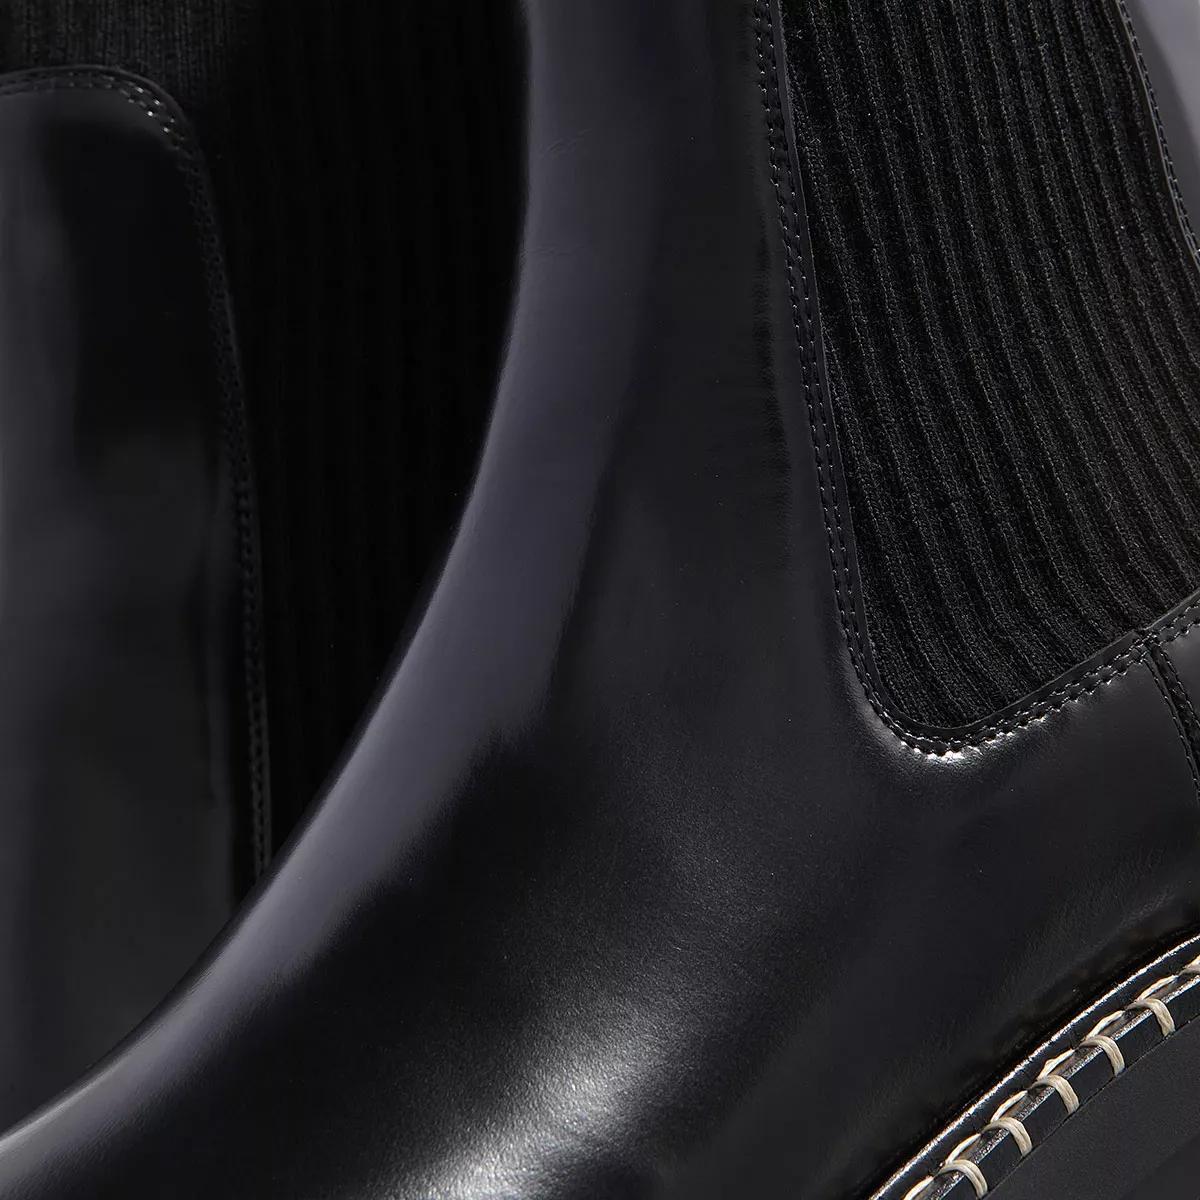 Chloé Boots & laarzen Noua Shiny Leather Ankle Boots in zwart